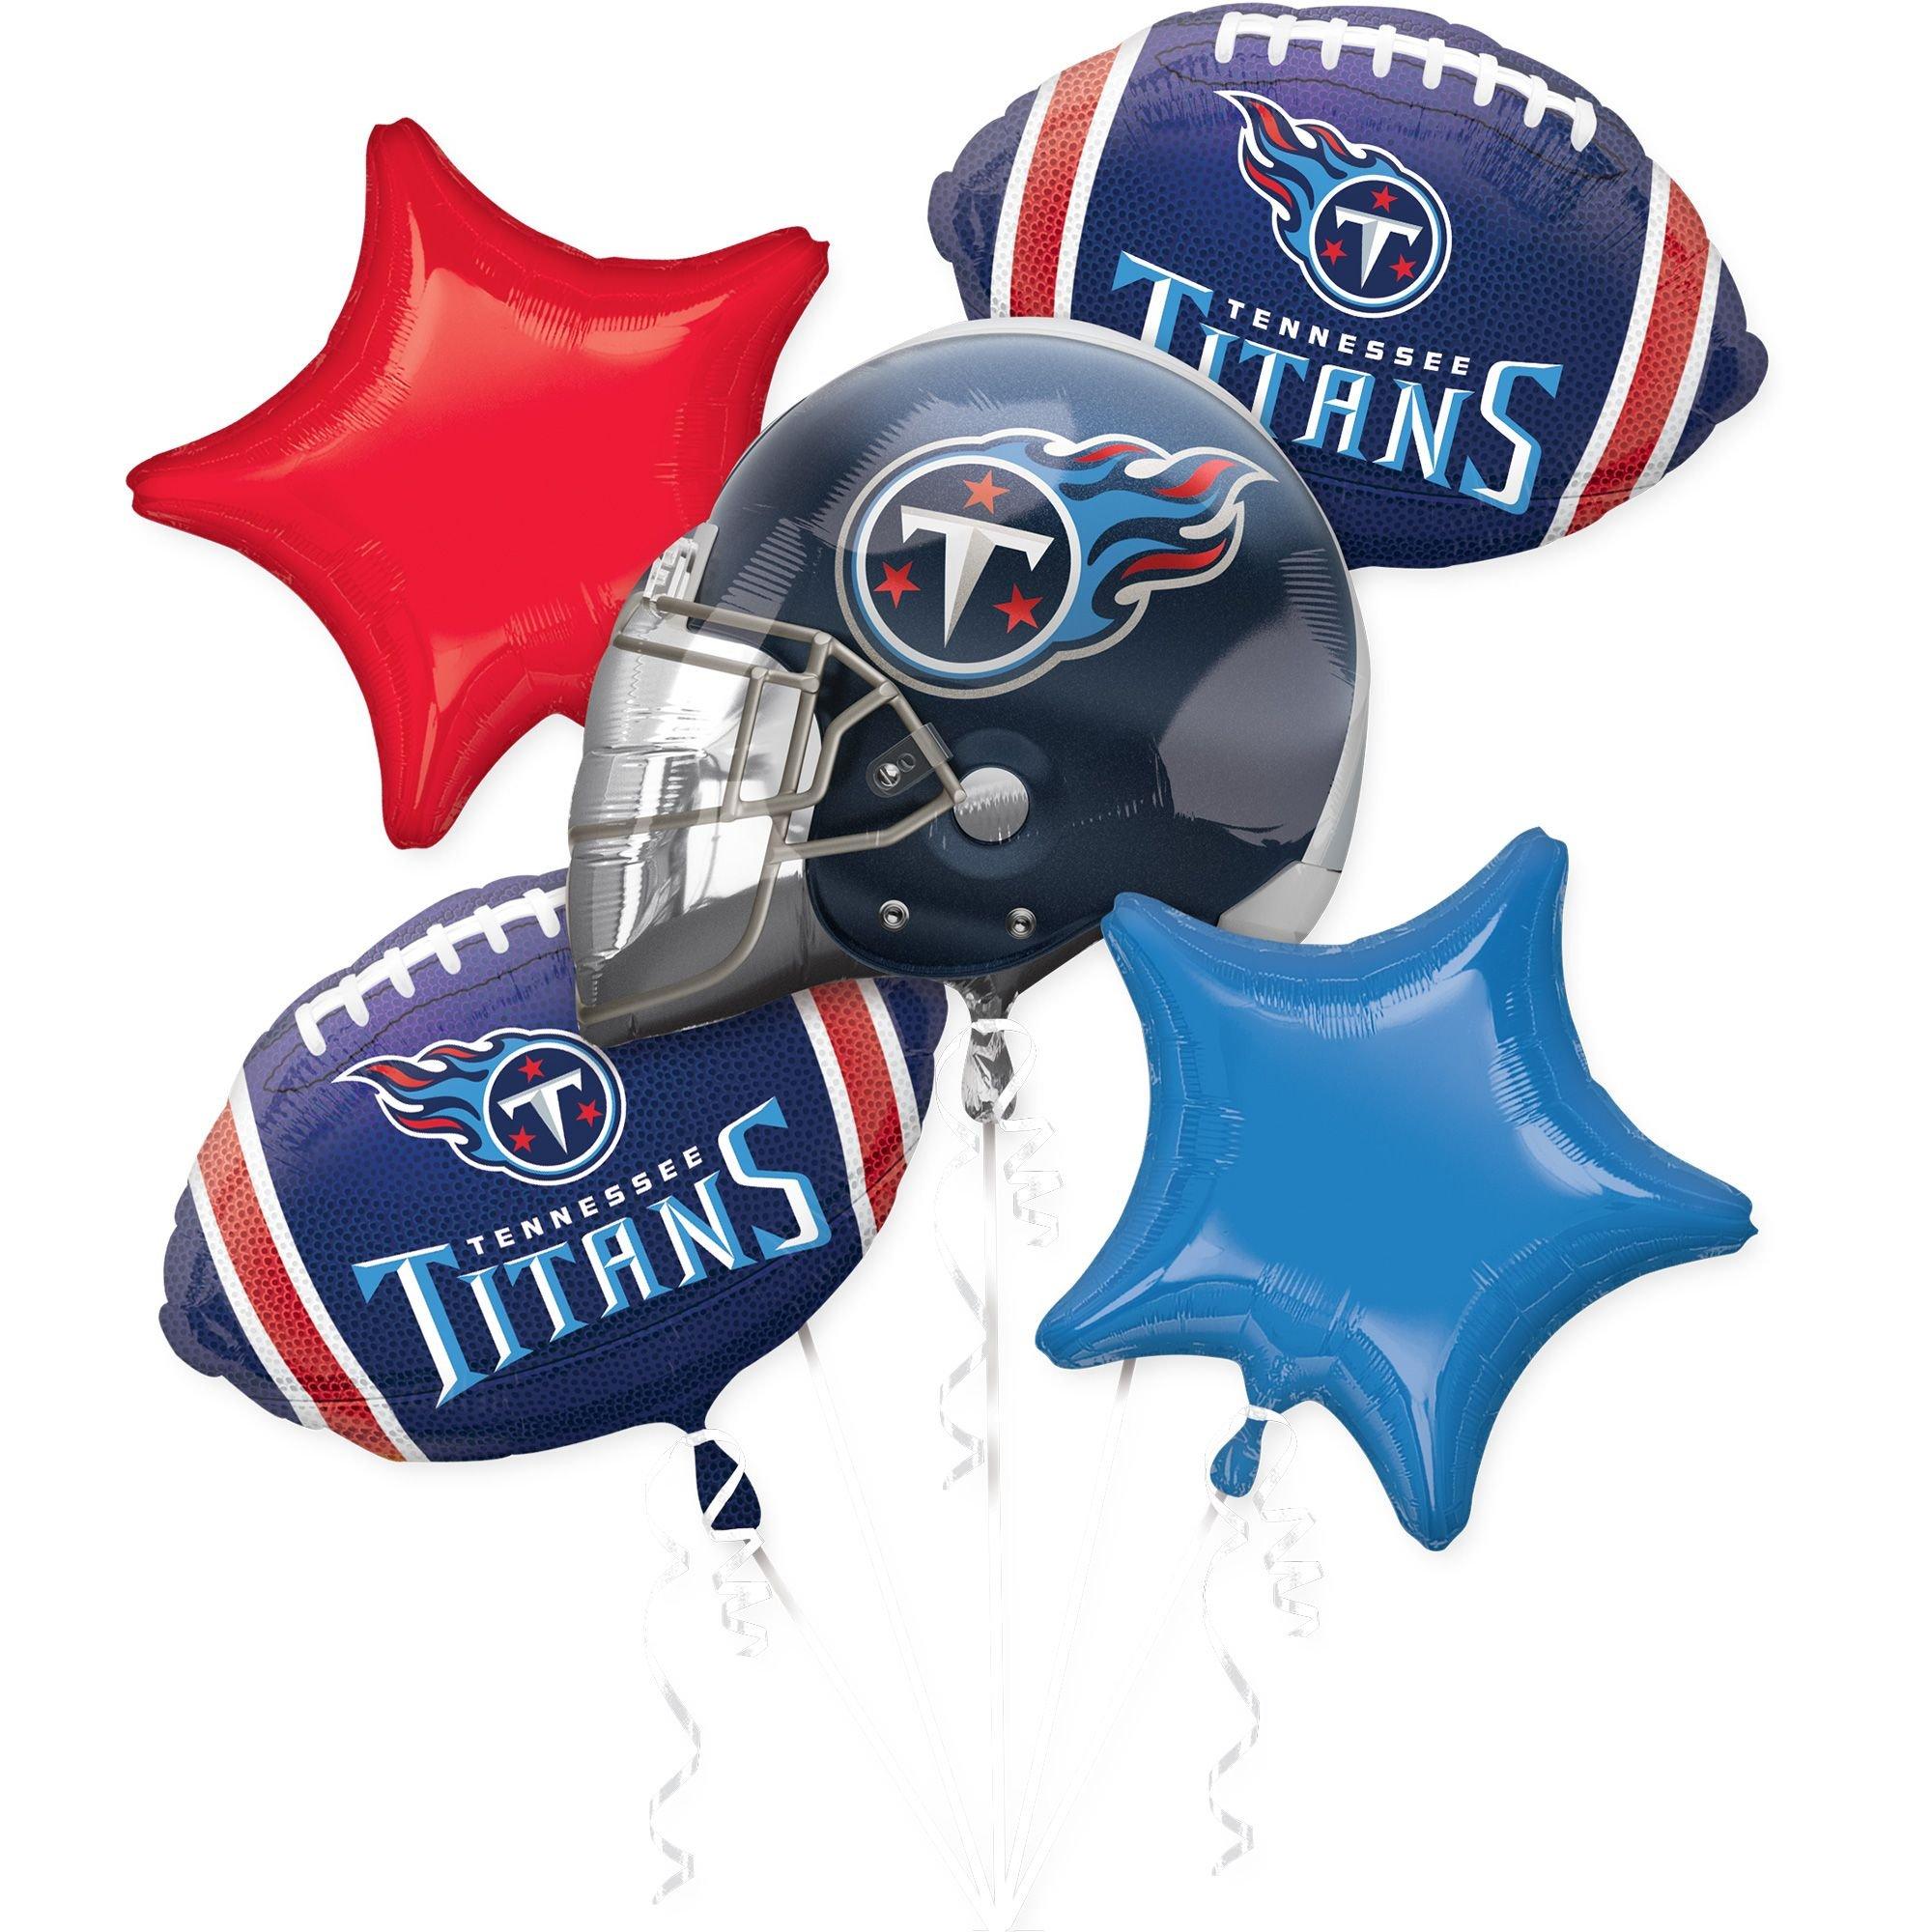 Pkgd Tennessee Titans Foil Balloon Bouquet